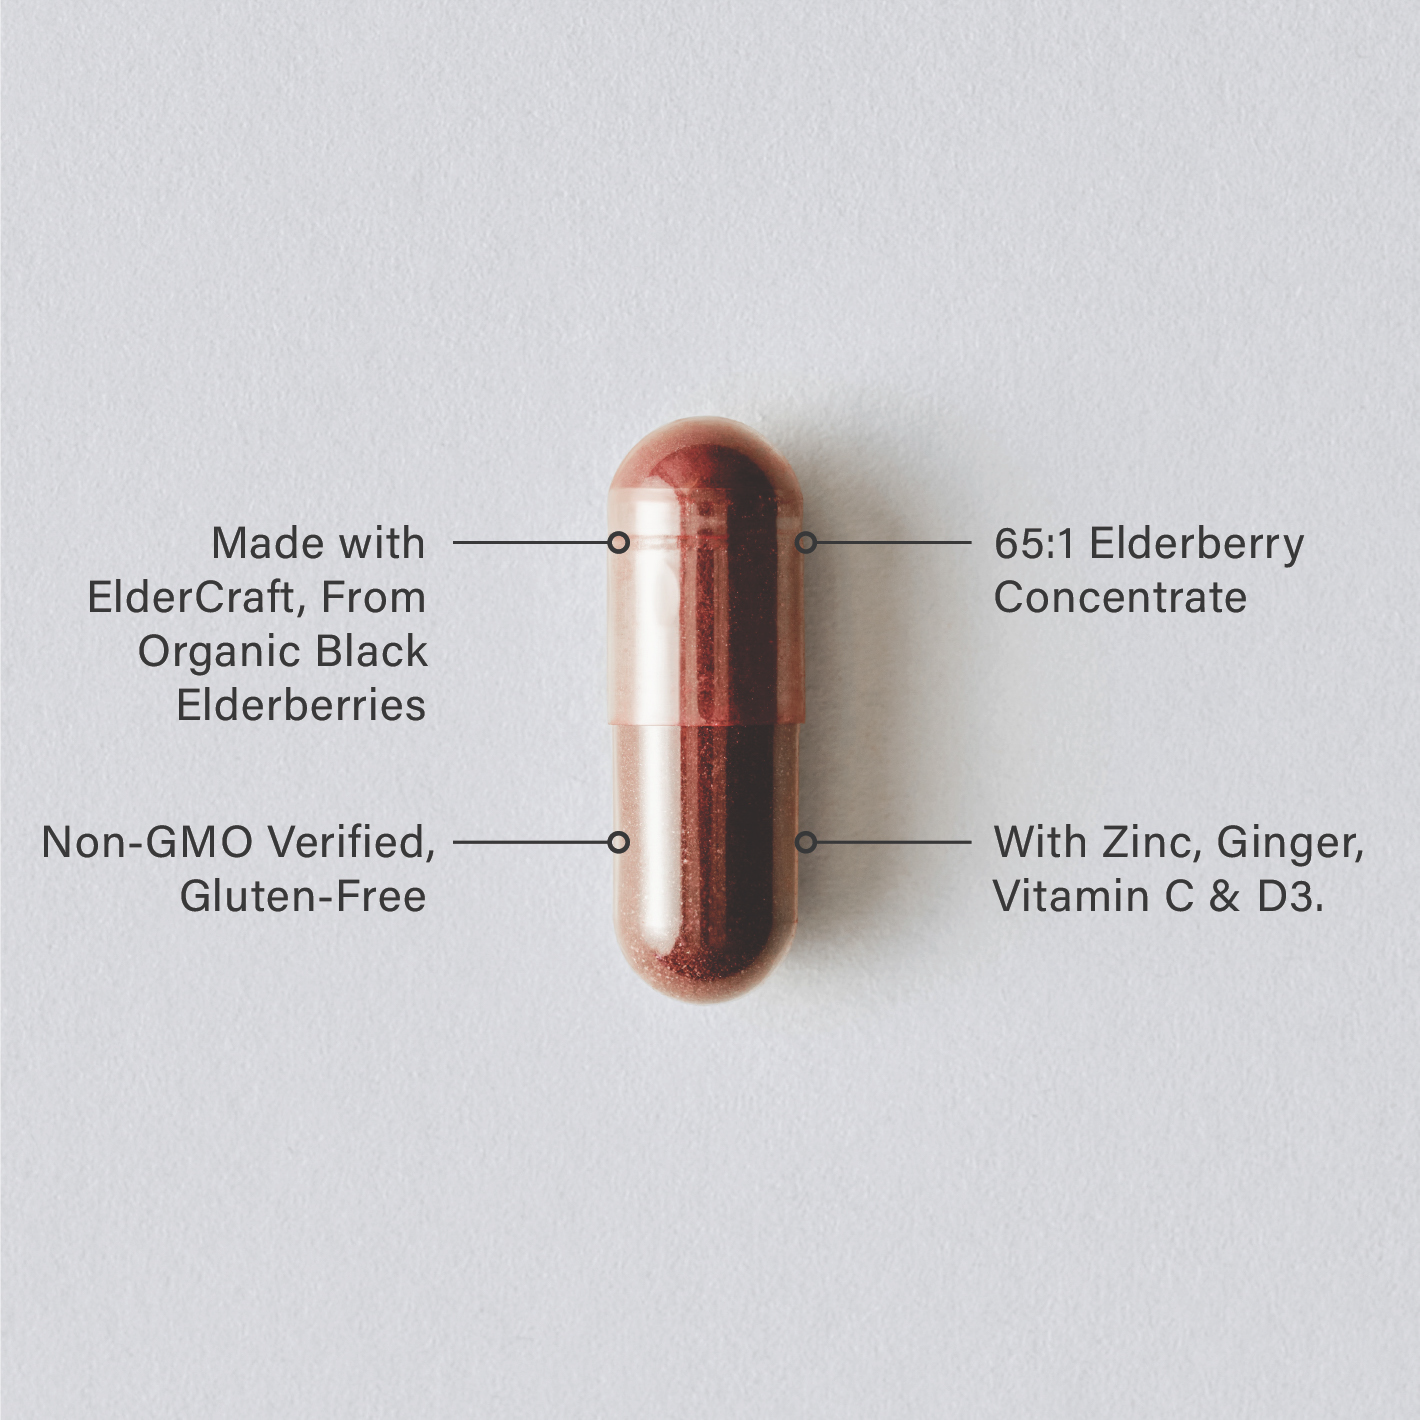 A single Sports Research Elderberry Complex veggie capsule infographic.